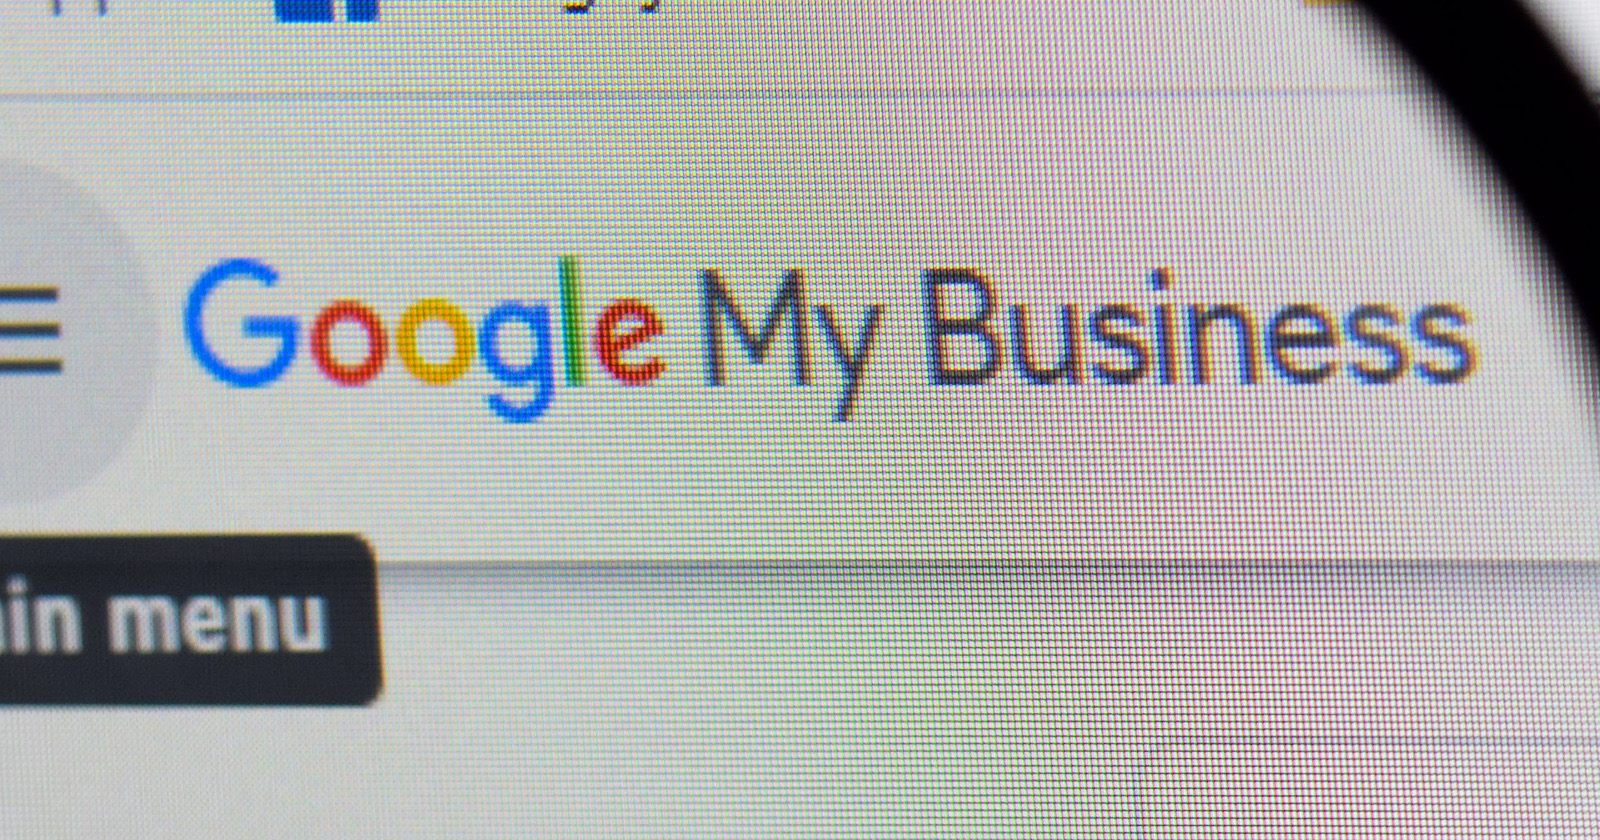 google my business changes to insights video uploads via mattgsouthern